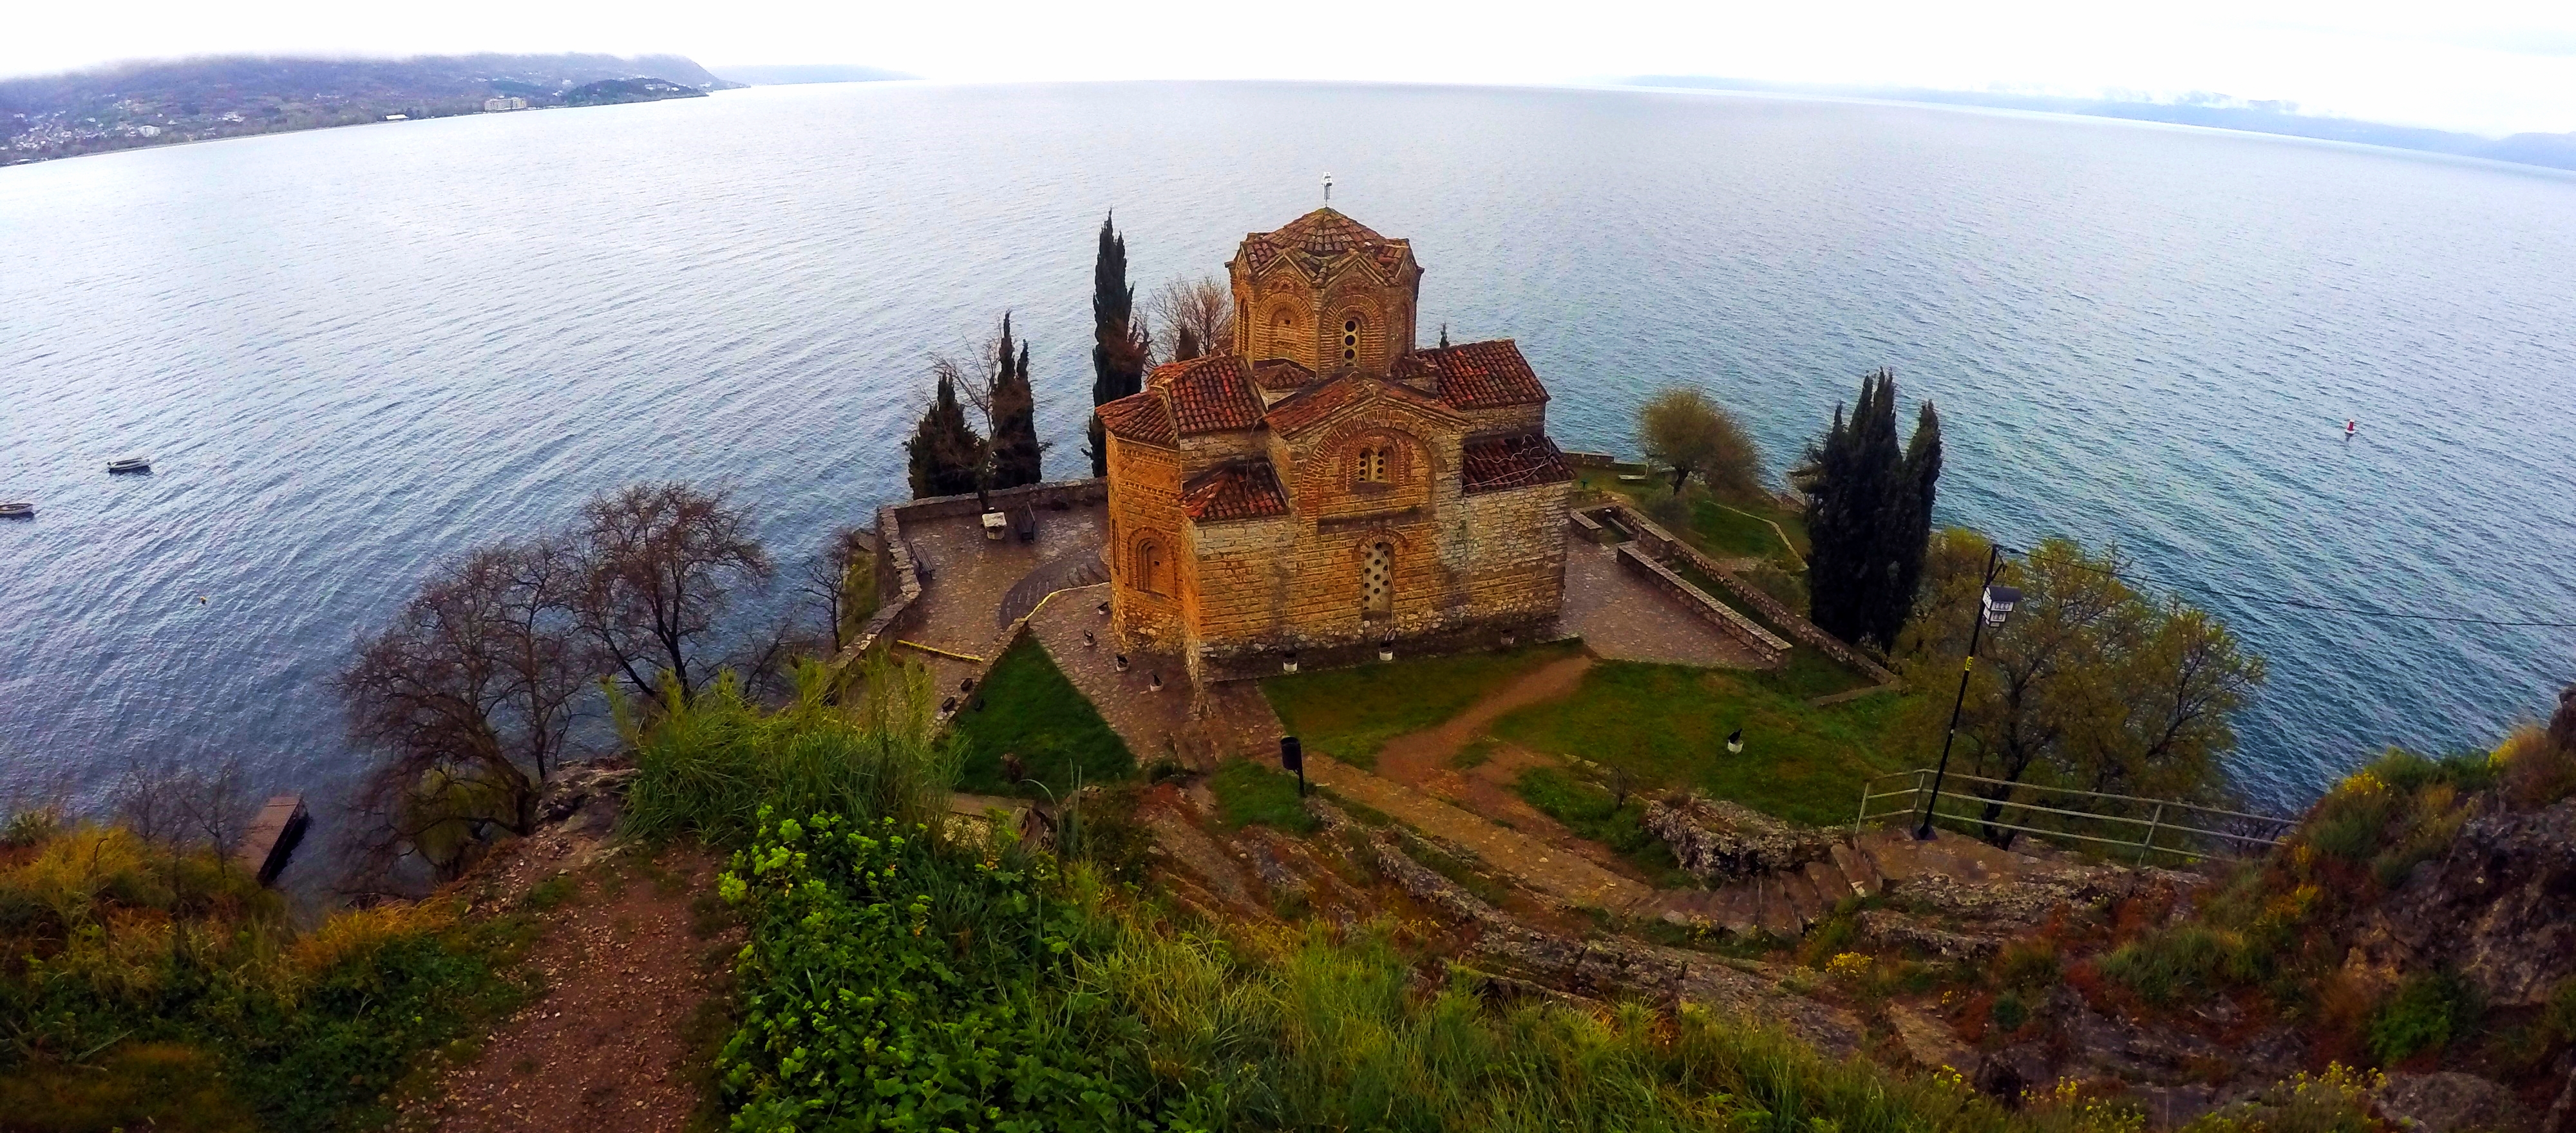 Macedonia – From Skopje to Lake Ohrid